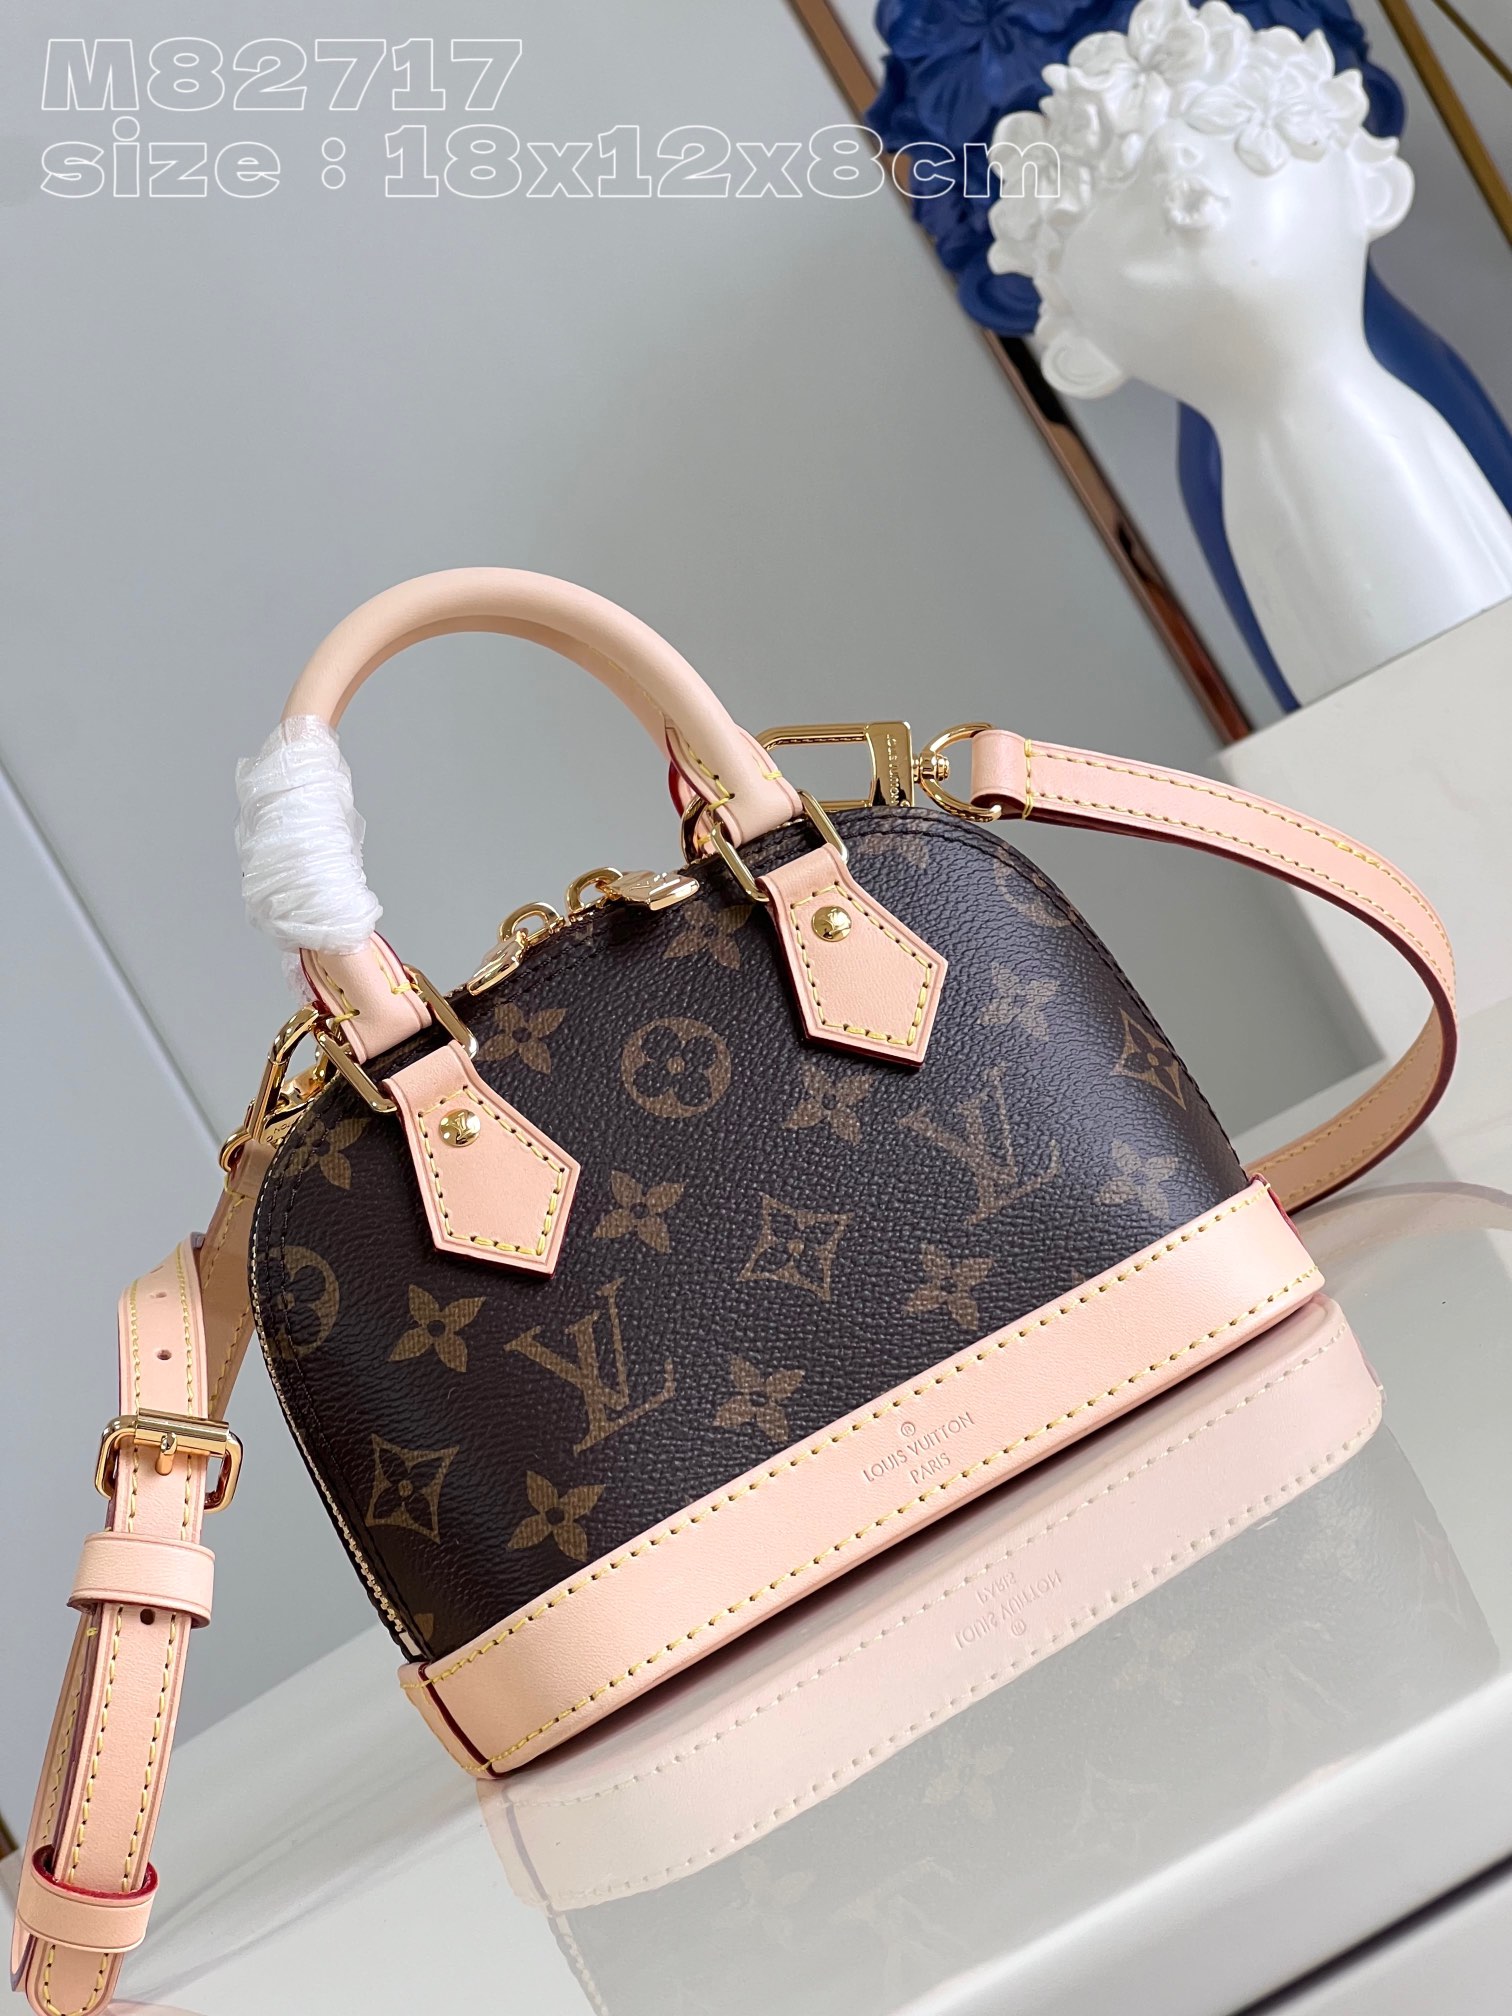 Louis Vuitton Bags Handbags Monogram Canvas M82717